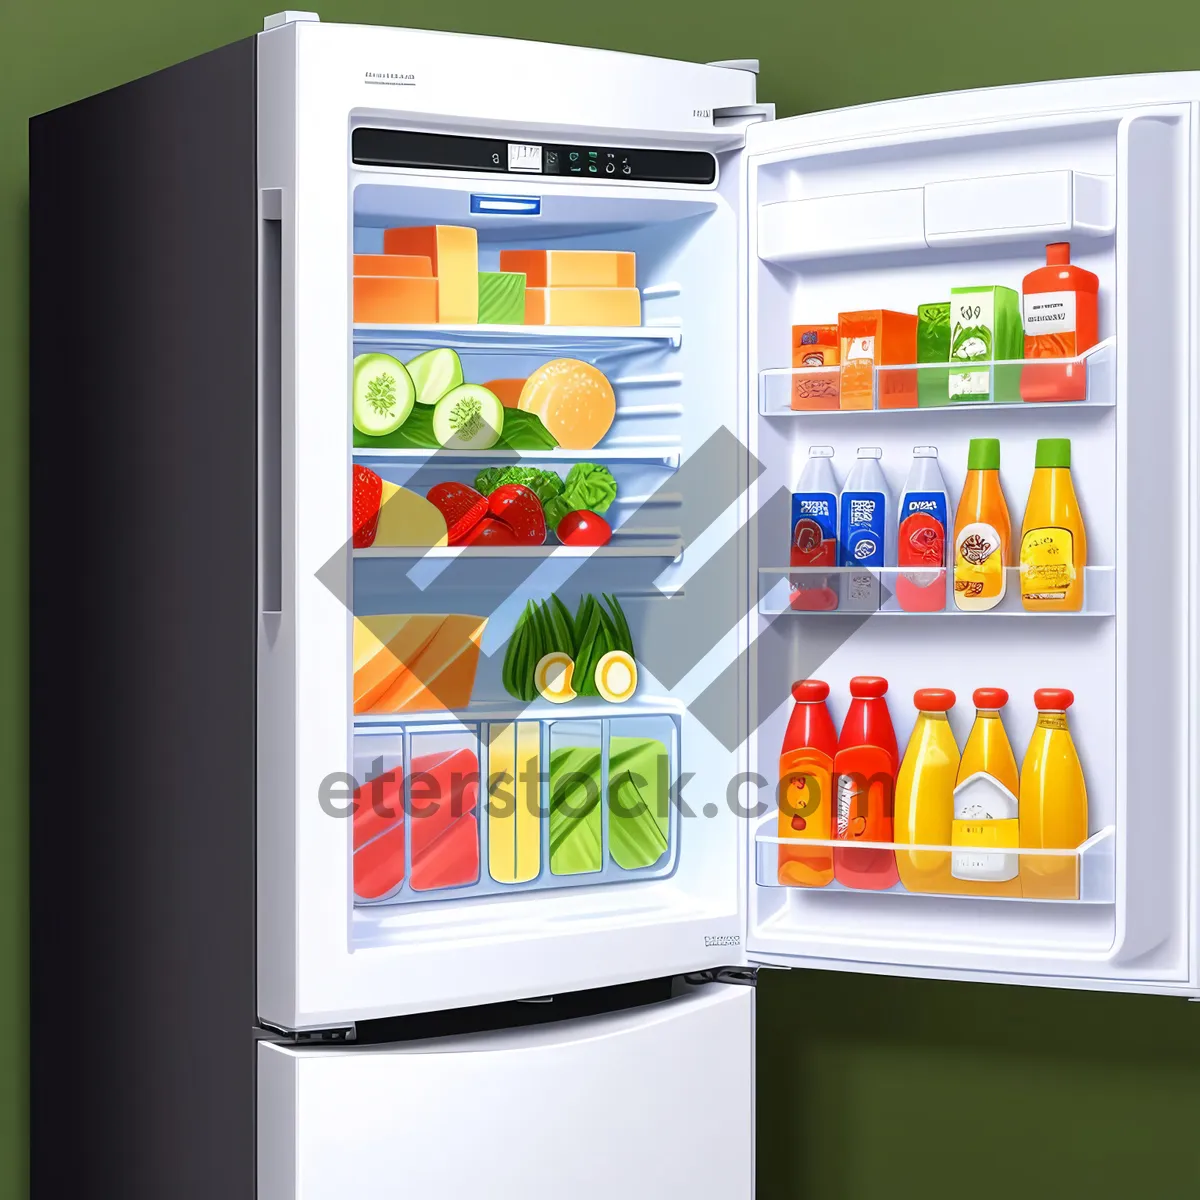 Picture of SmartTech Vending: Futuristic White Goods Refrigerator Slot Machine